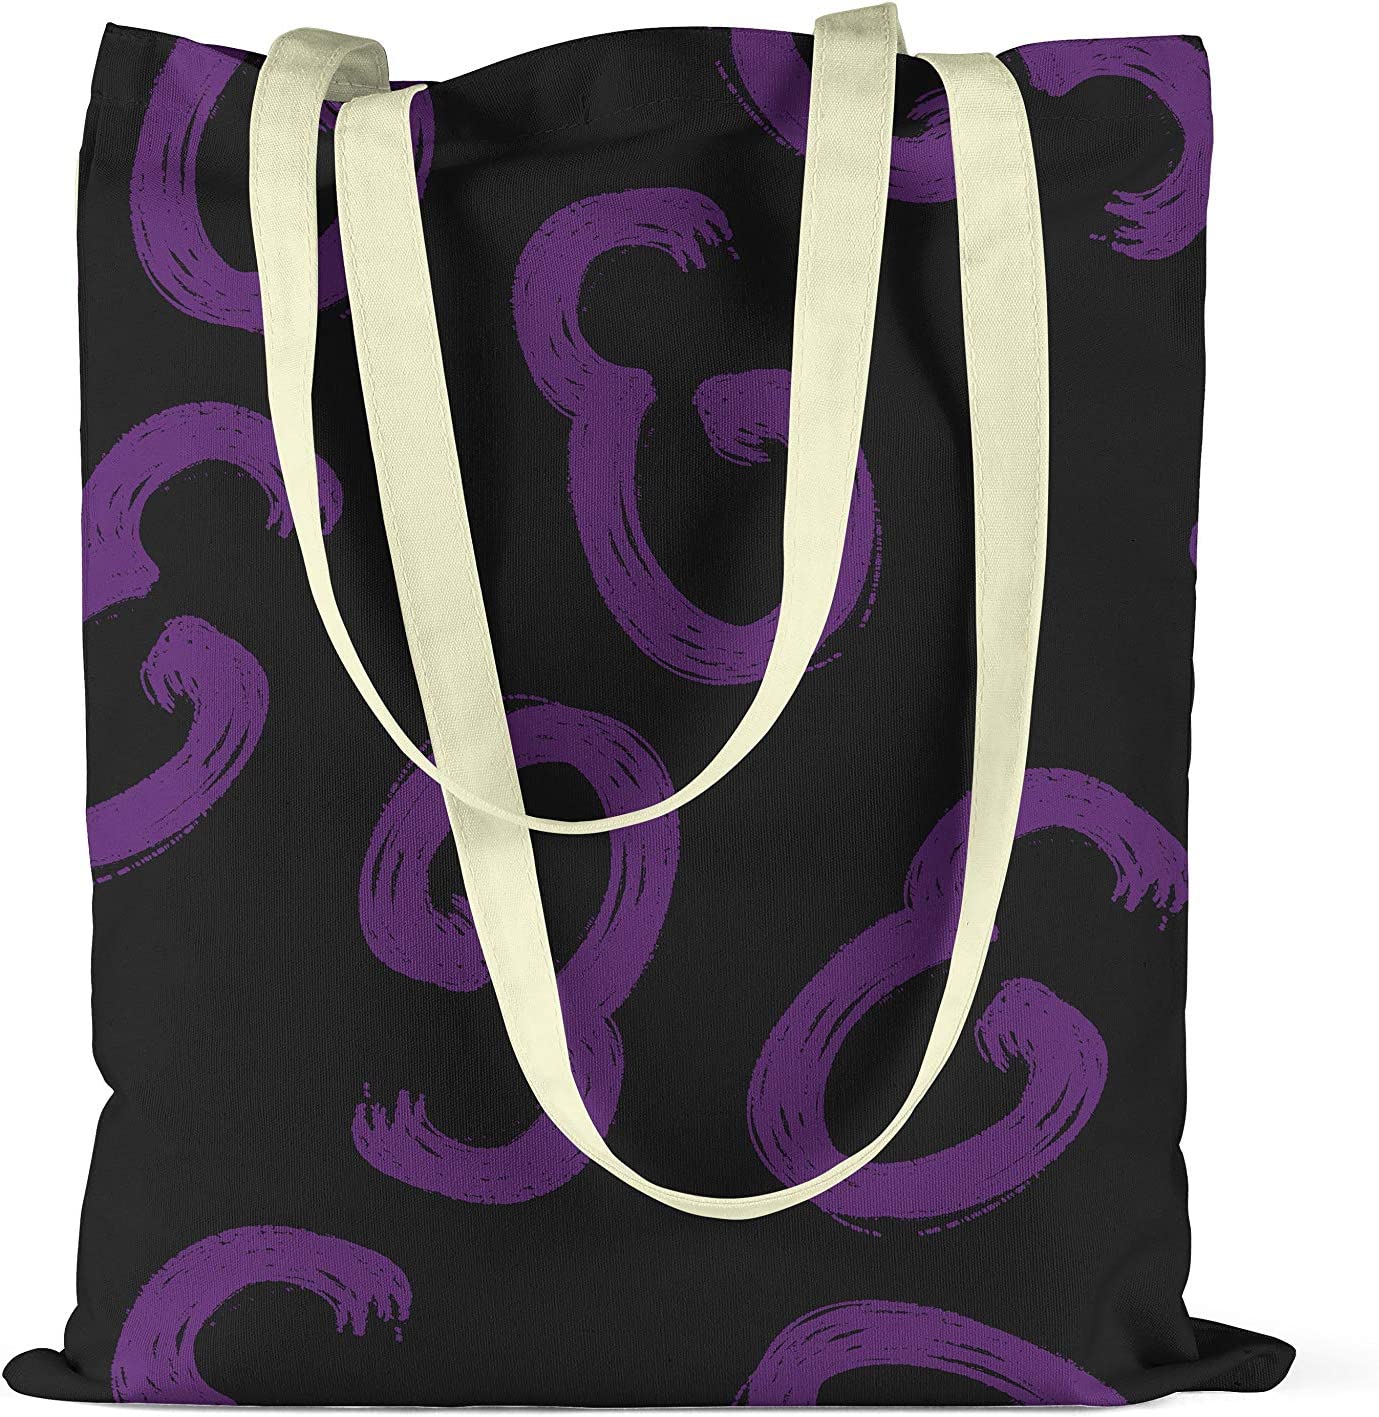 Bonamaison Purple Swirl Design Printed Black Tote Bag 34 x 40cm RRP 5.99 CLEARANCE XL 3.99